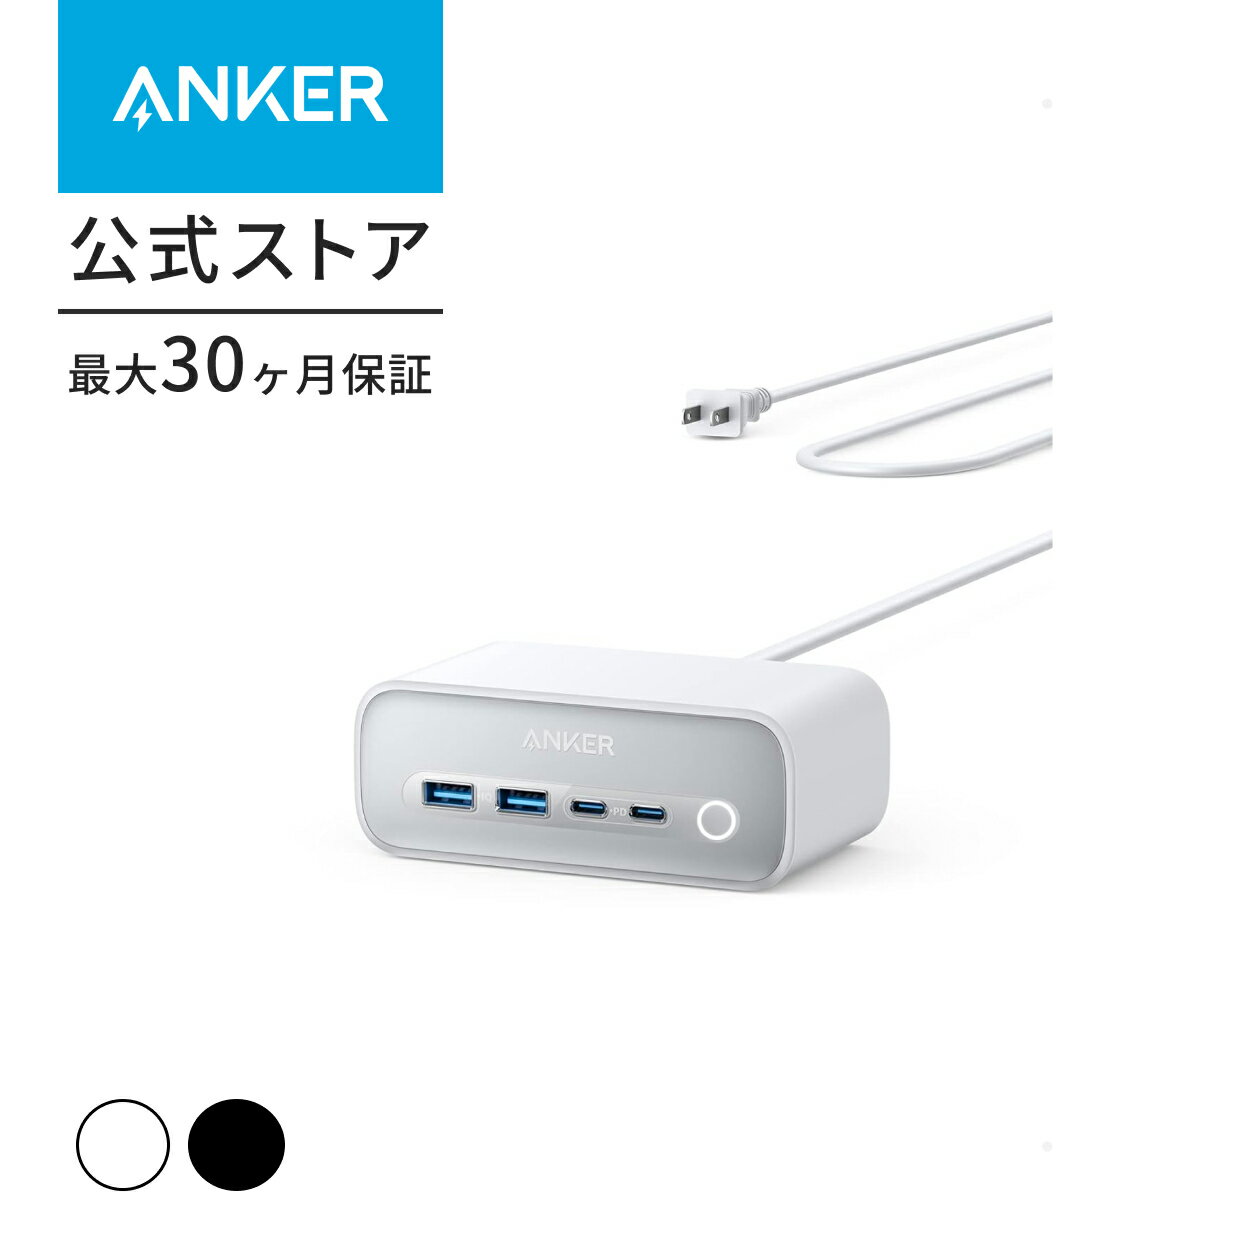 Anker 525 Charging Station (USBタップ 電源タップ AC差込口 3口 USB-C 2ポート USB-A 2ポート 延長コード 1.5m) 